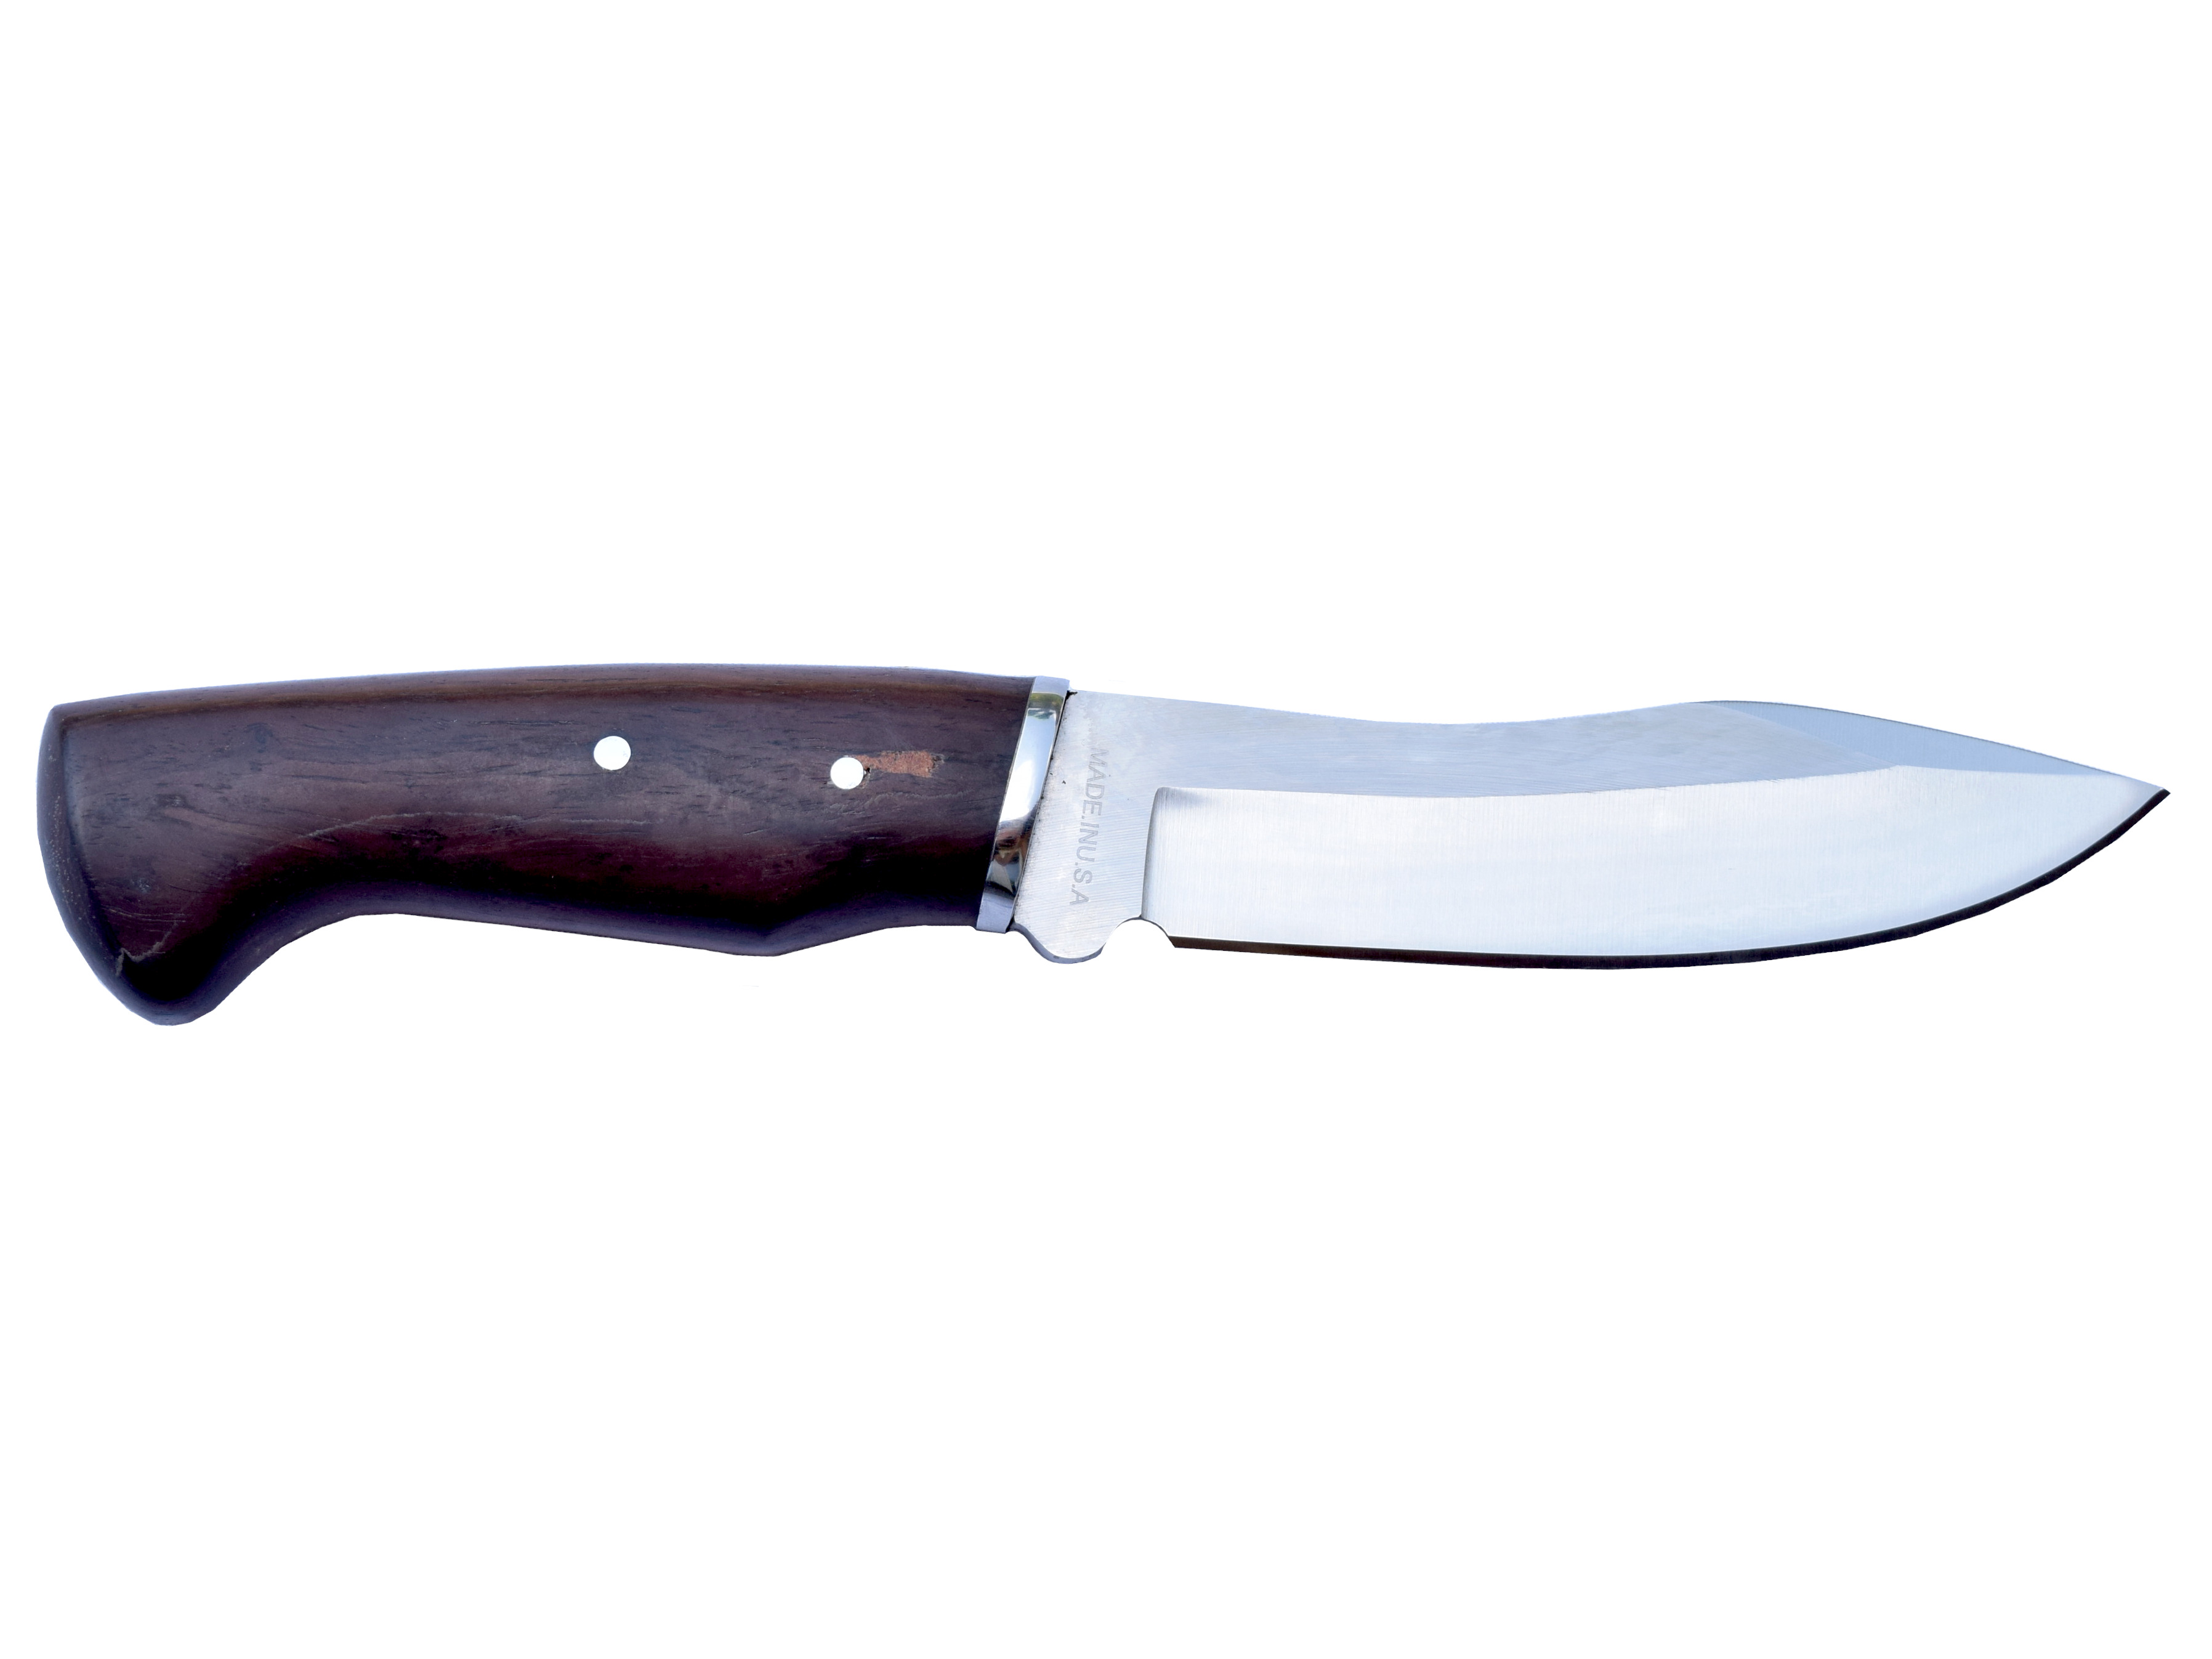 Columbia rosewood Grizzly lovecký nůž